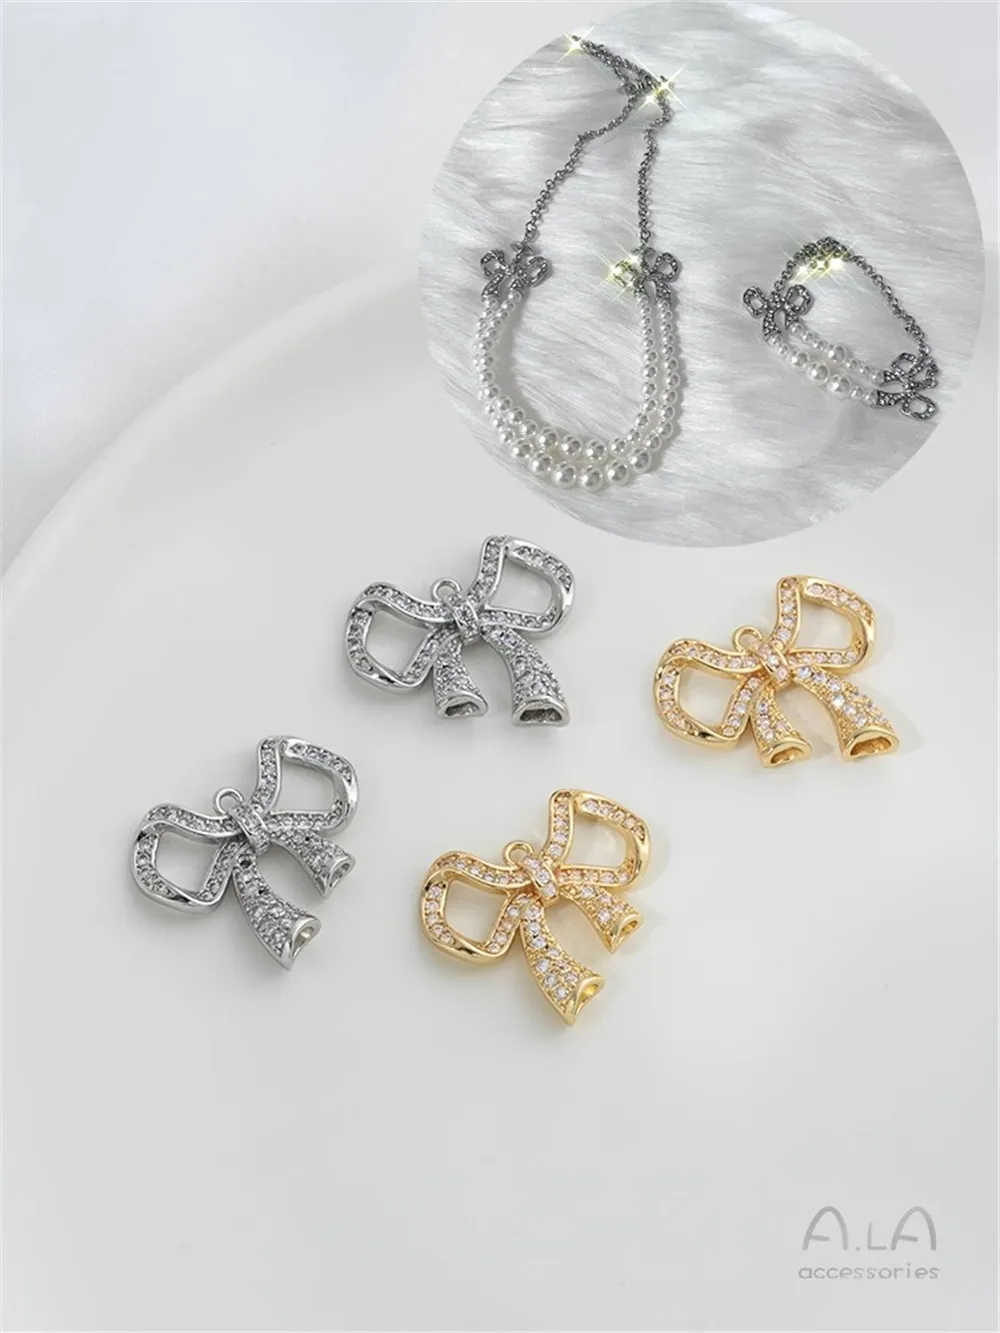 

14K Gold-filled Micro Inlaid Zircon Bow Three Hanging Pendant Handmade DIY Handmade Bracelet Necklace Jewelry Accessories B375